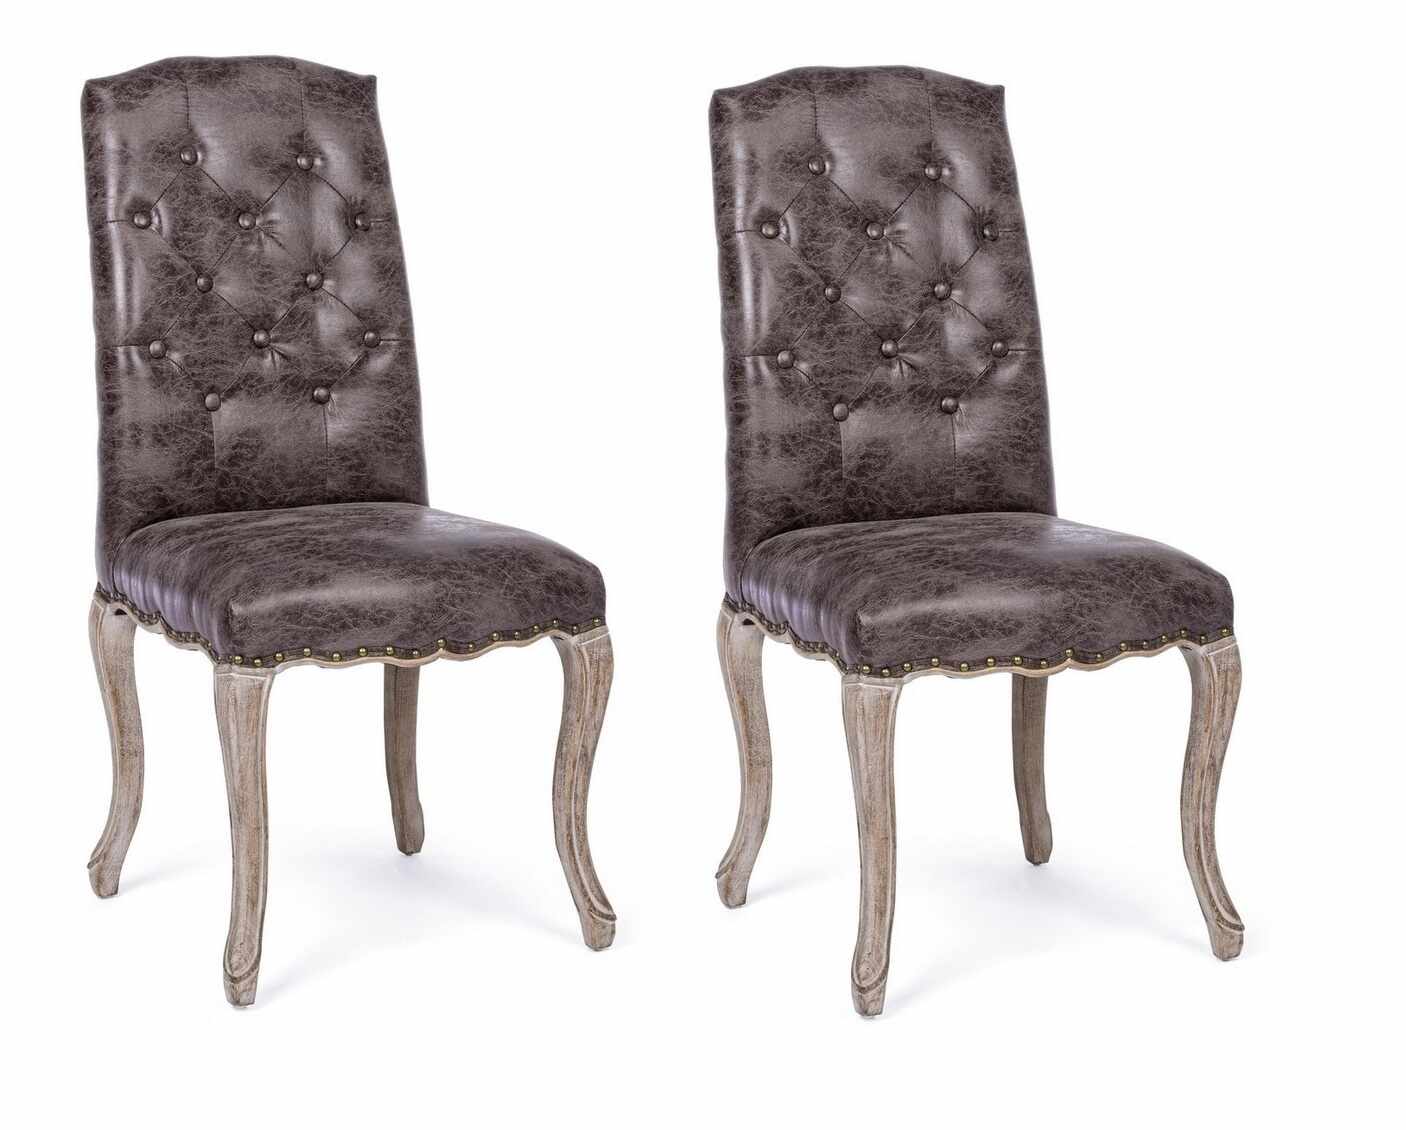 Set 2 scaune tapitate cu stofa si picioare din lemn Diva Maro Inchis / Natural, l51xA53xH99 cm